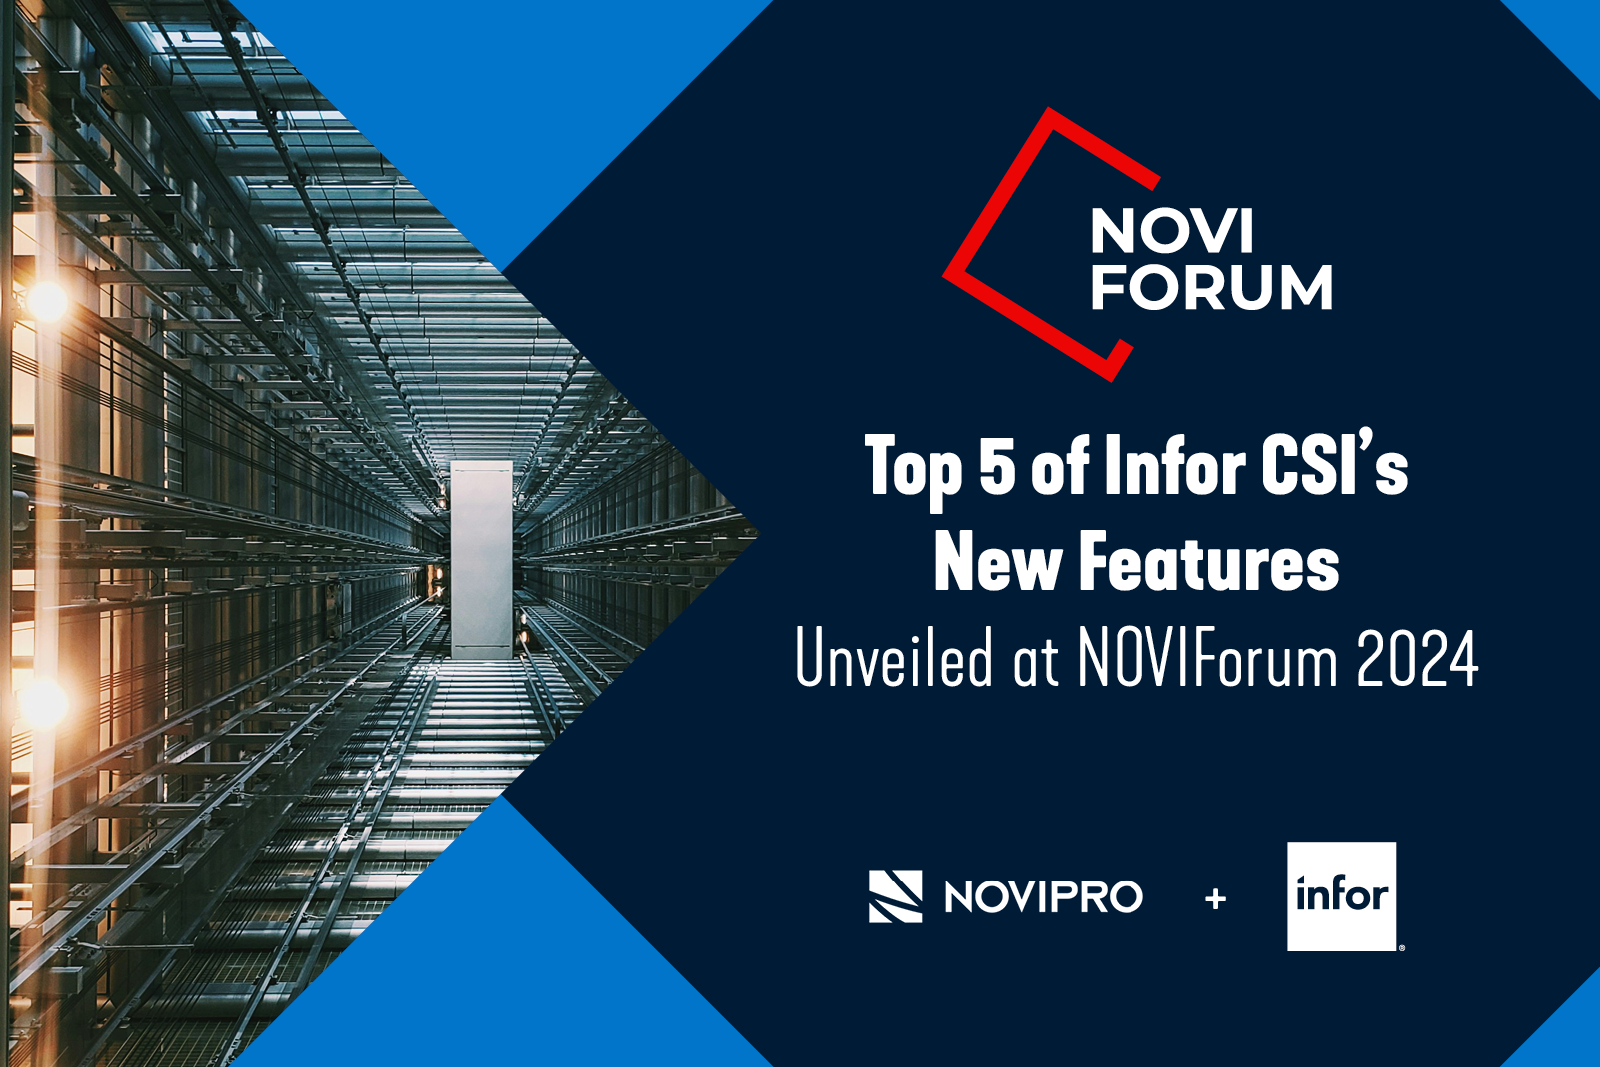 Top 5 of Infor CSI’s New Features Unveiled at NOVIForum 2024